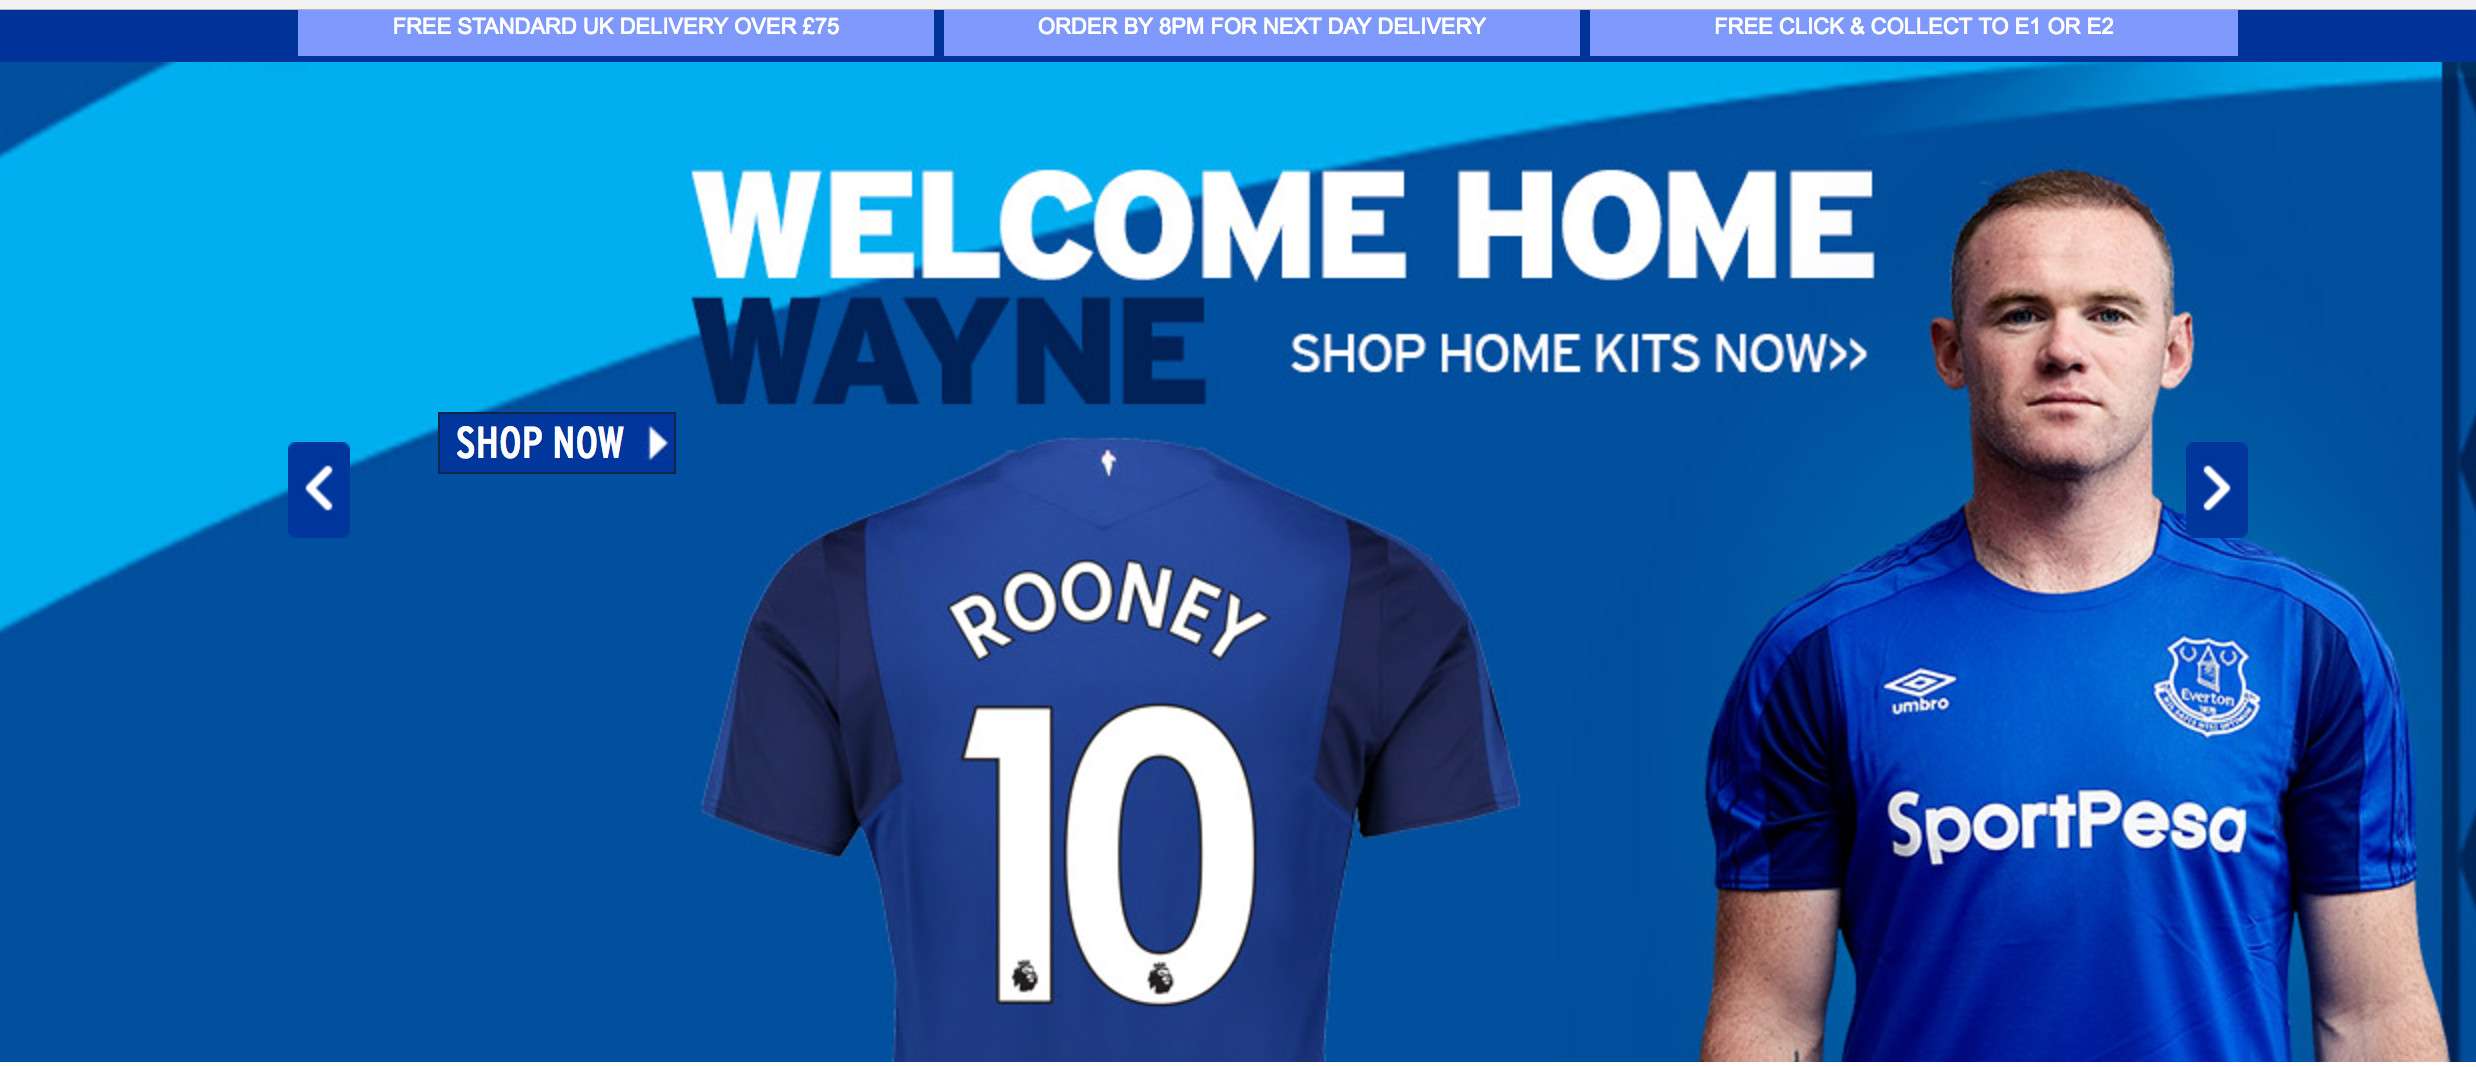 Rooney kit no